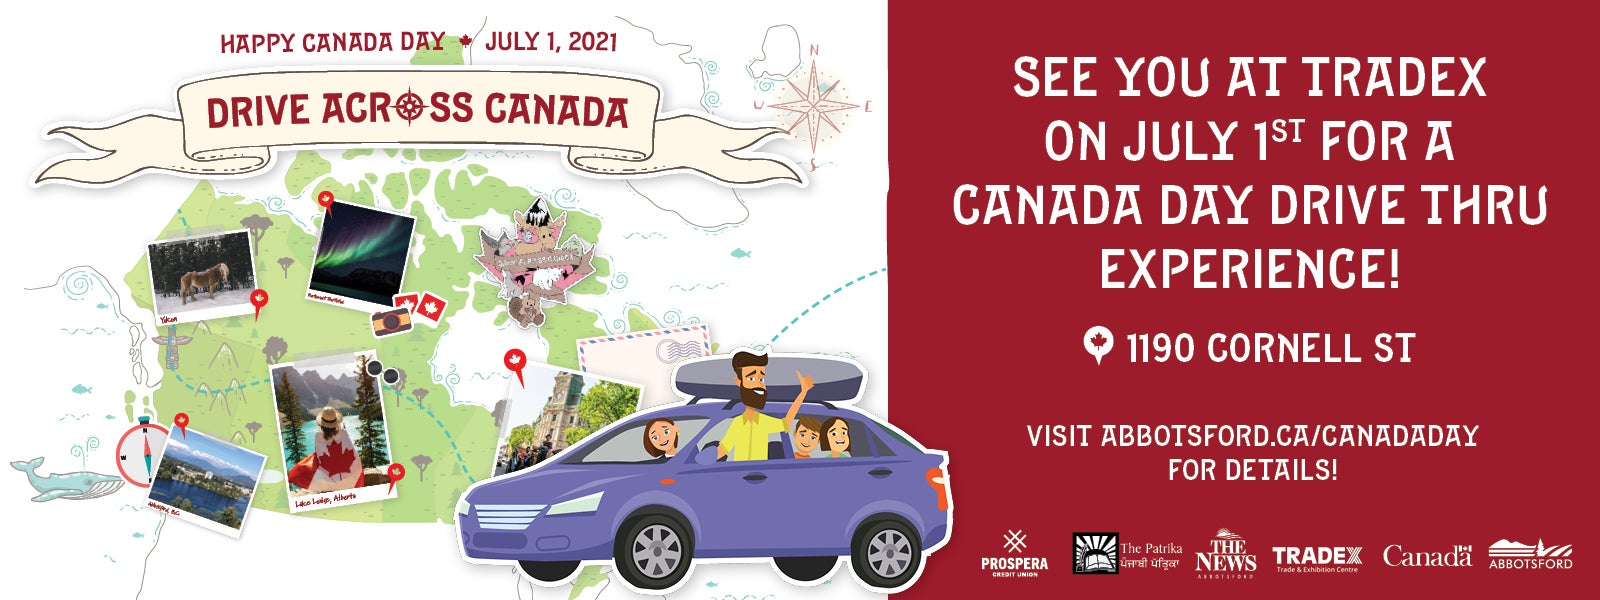 Canada Day - Drive Across Canada 